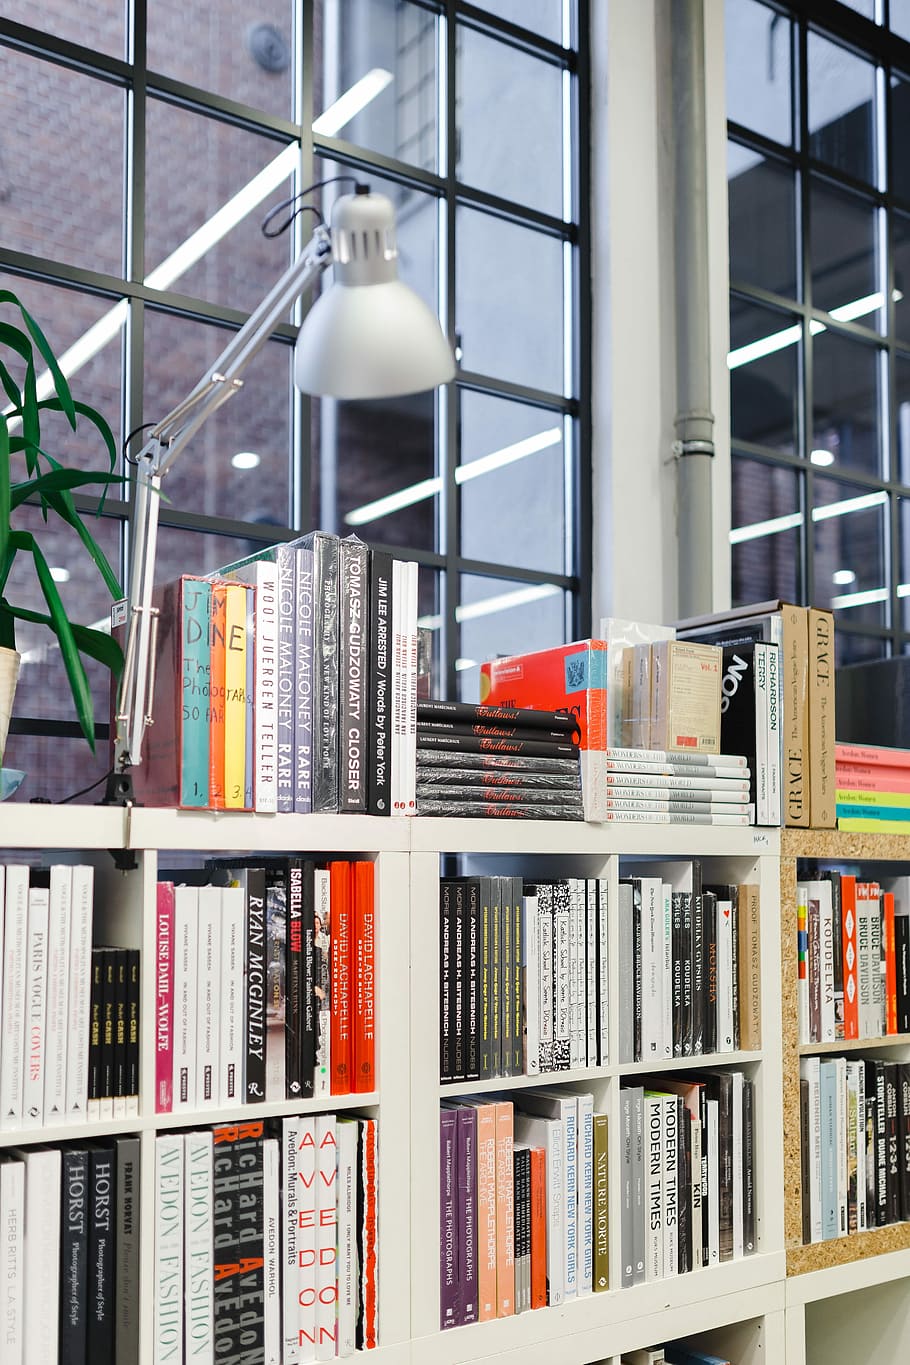 kunjungi, toko buku, buku, pengetahuan, perpustakaan, rak buku, rak, di dalam ruangan, pendidikan, sastra